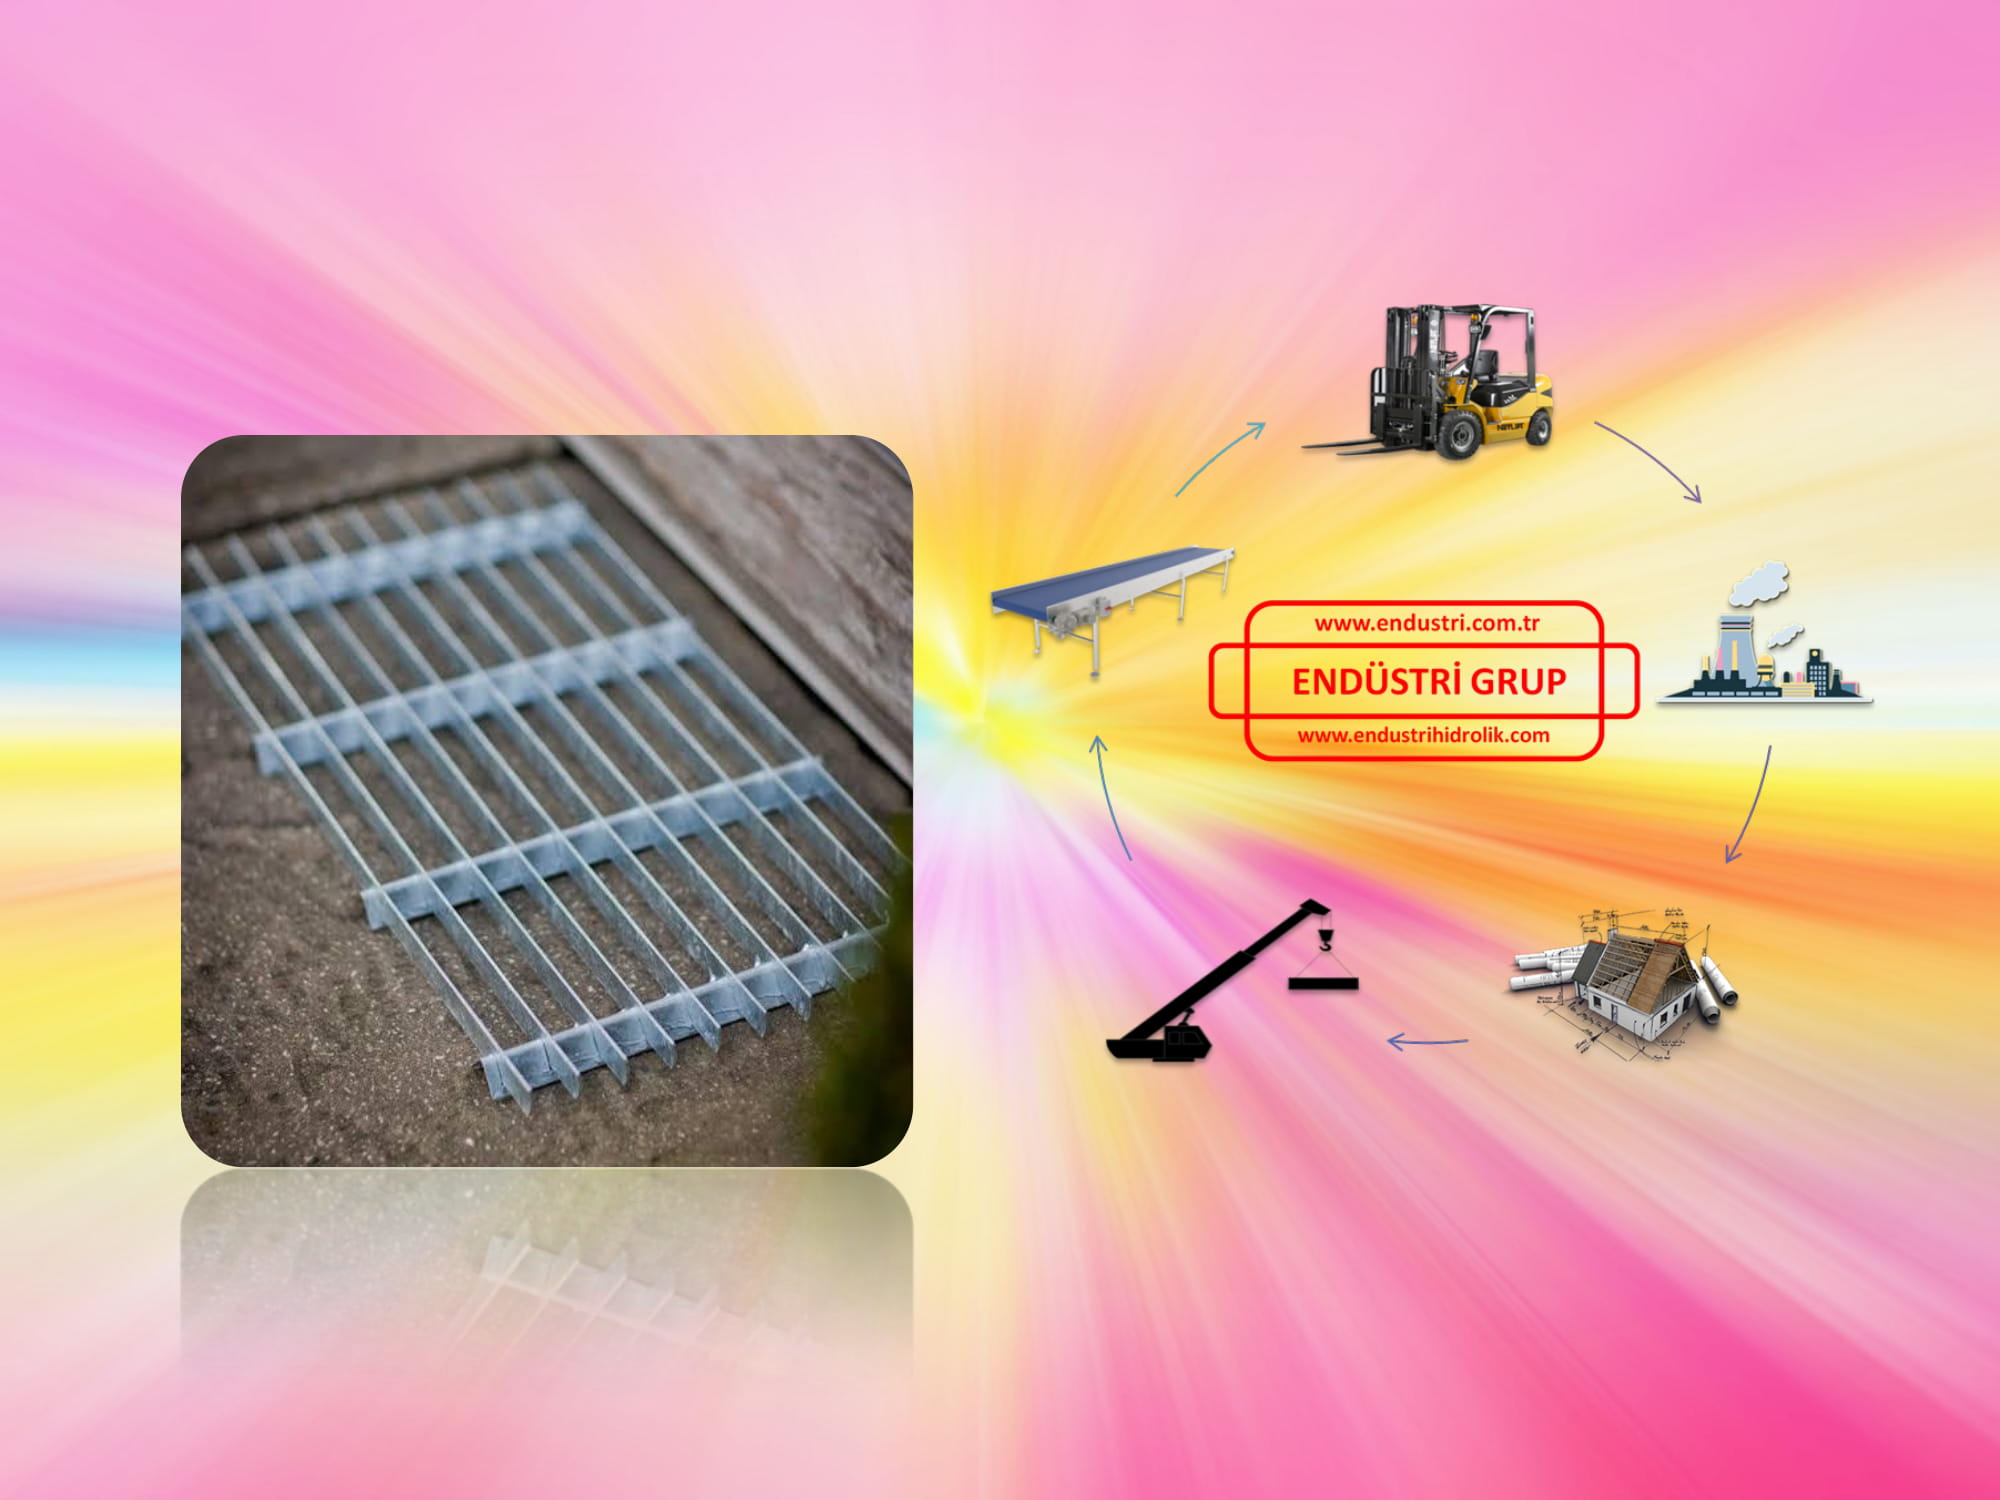 galvanizli-platform-izgaralari-paslanmaz-petek-izgarasi-basamak-metal-celik-izgara